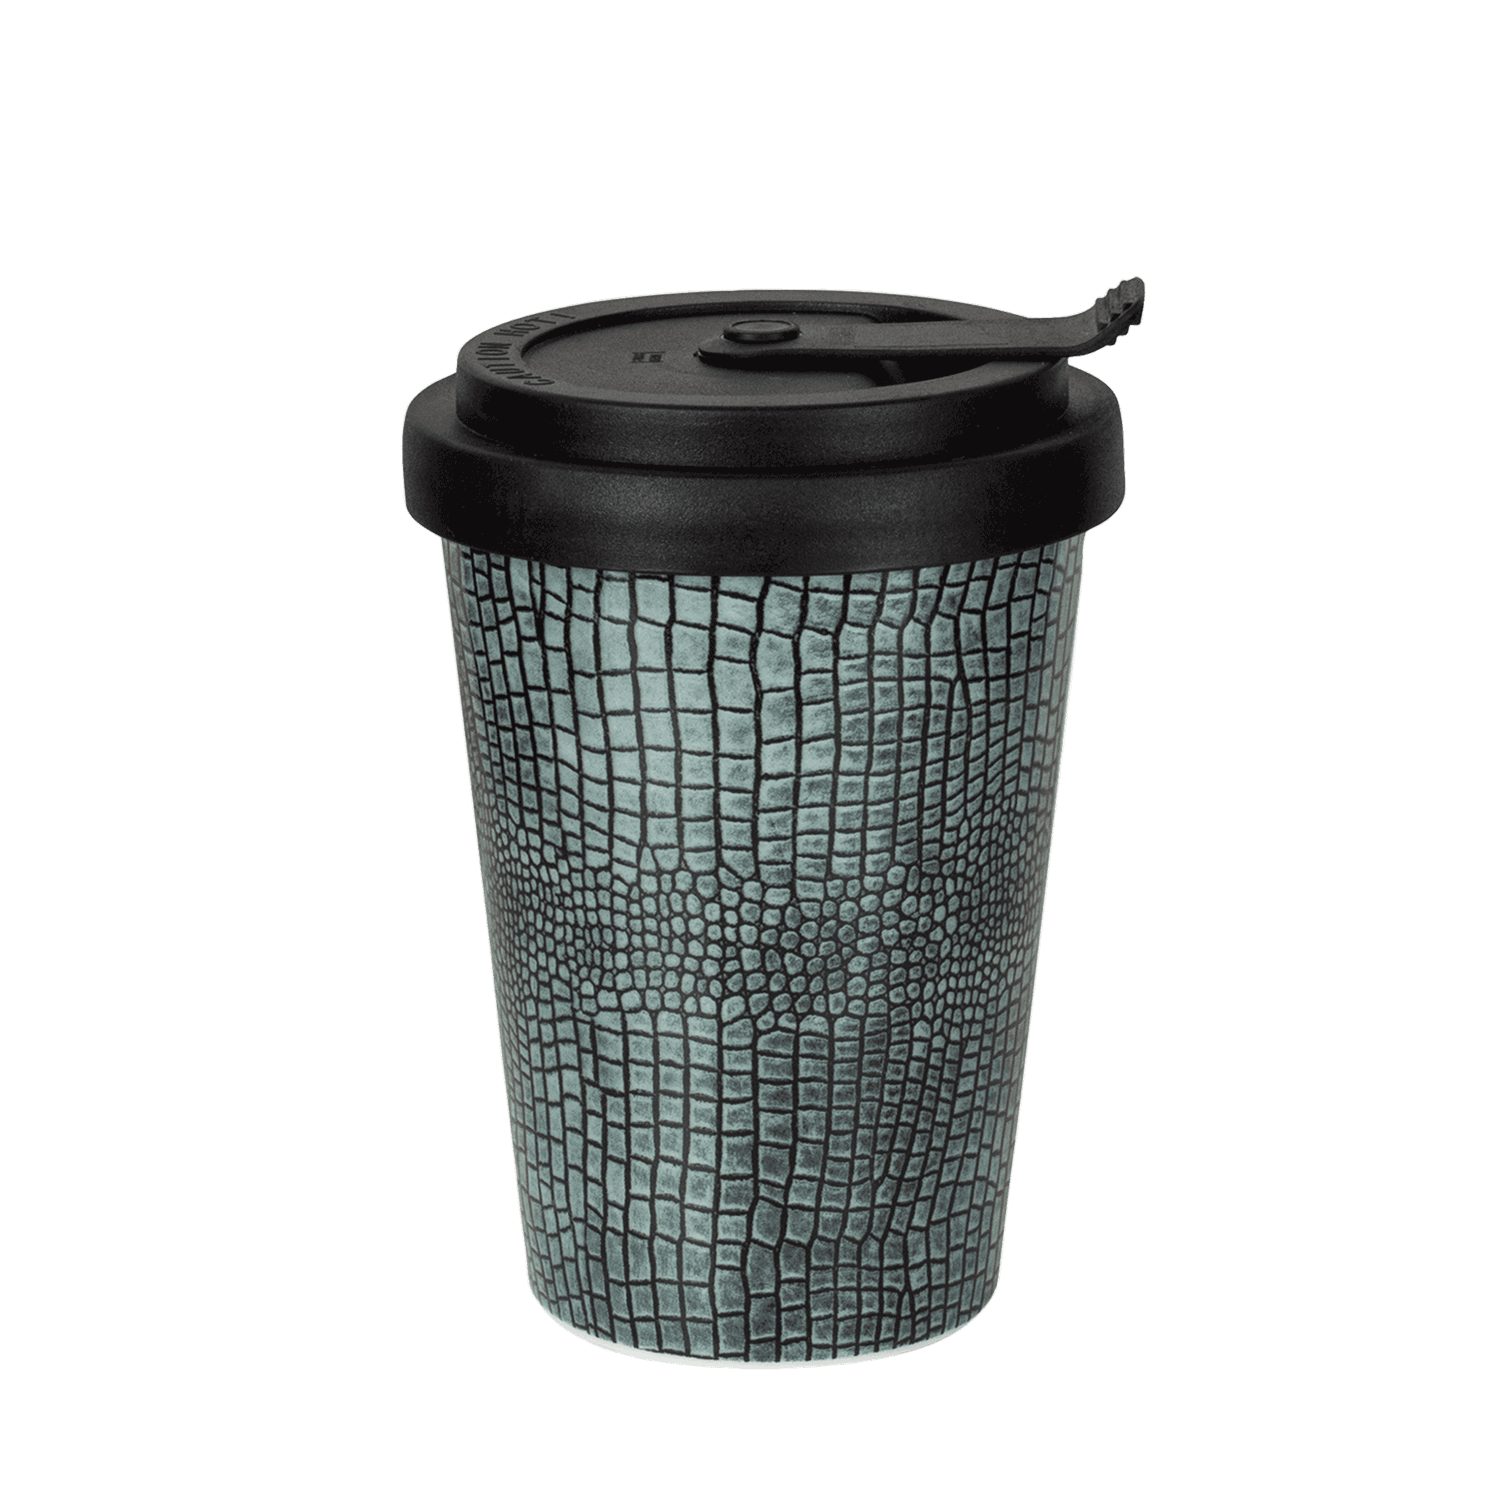 100% Manufaktur Coffee-to-go-Becher Deckel, + Becher animalprint, Porzellan, auslaufsicher, spülmaschinengeeignet, Mahlwerck Crocodile klimaneutral Green Snacke